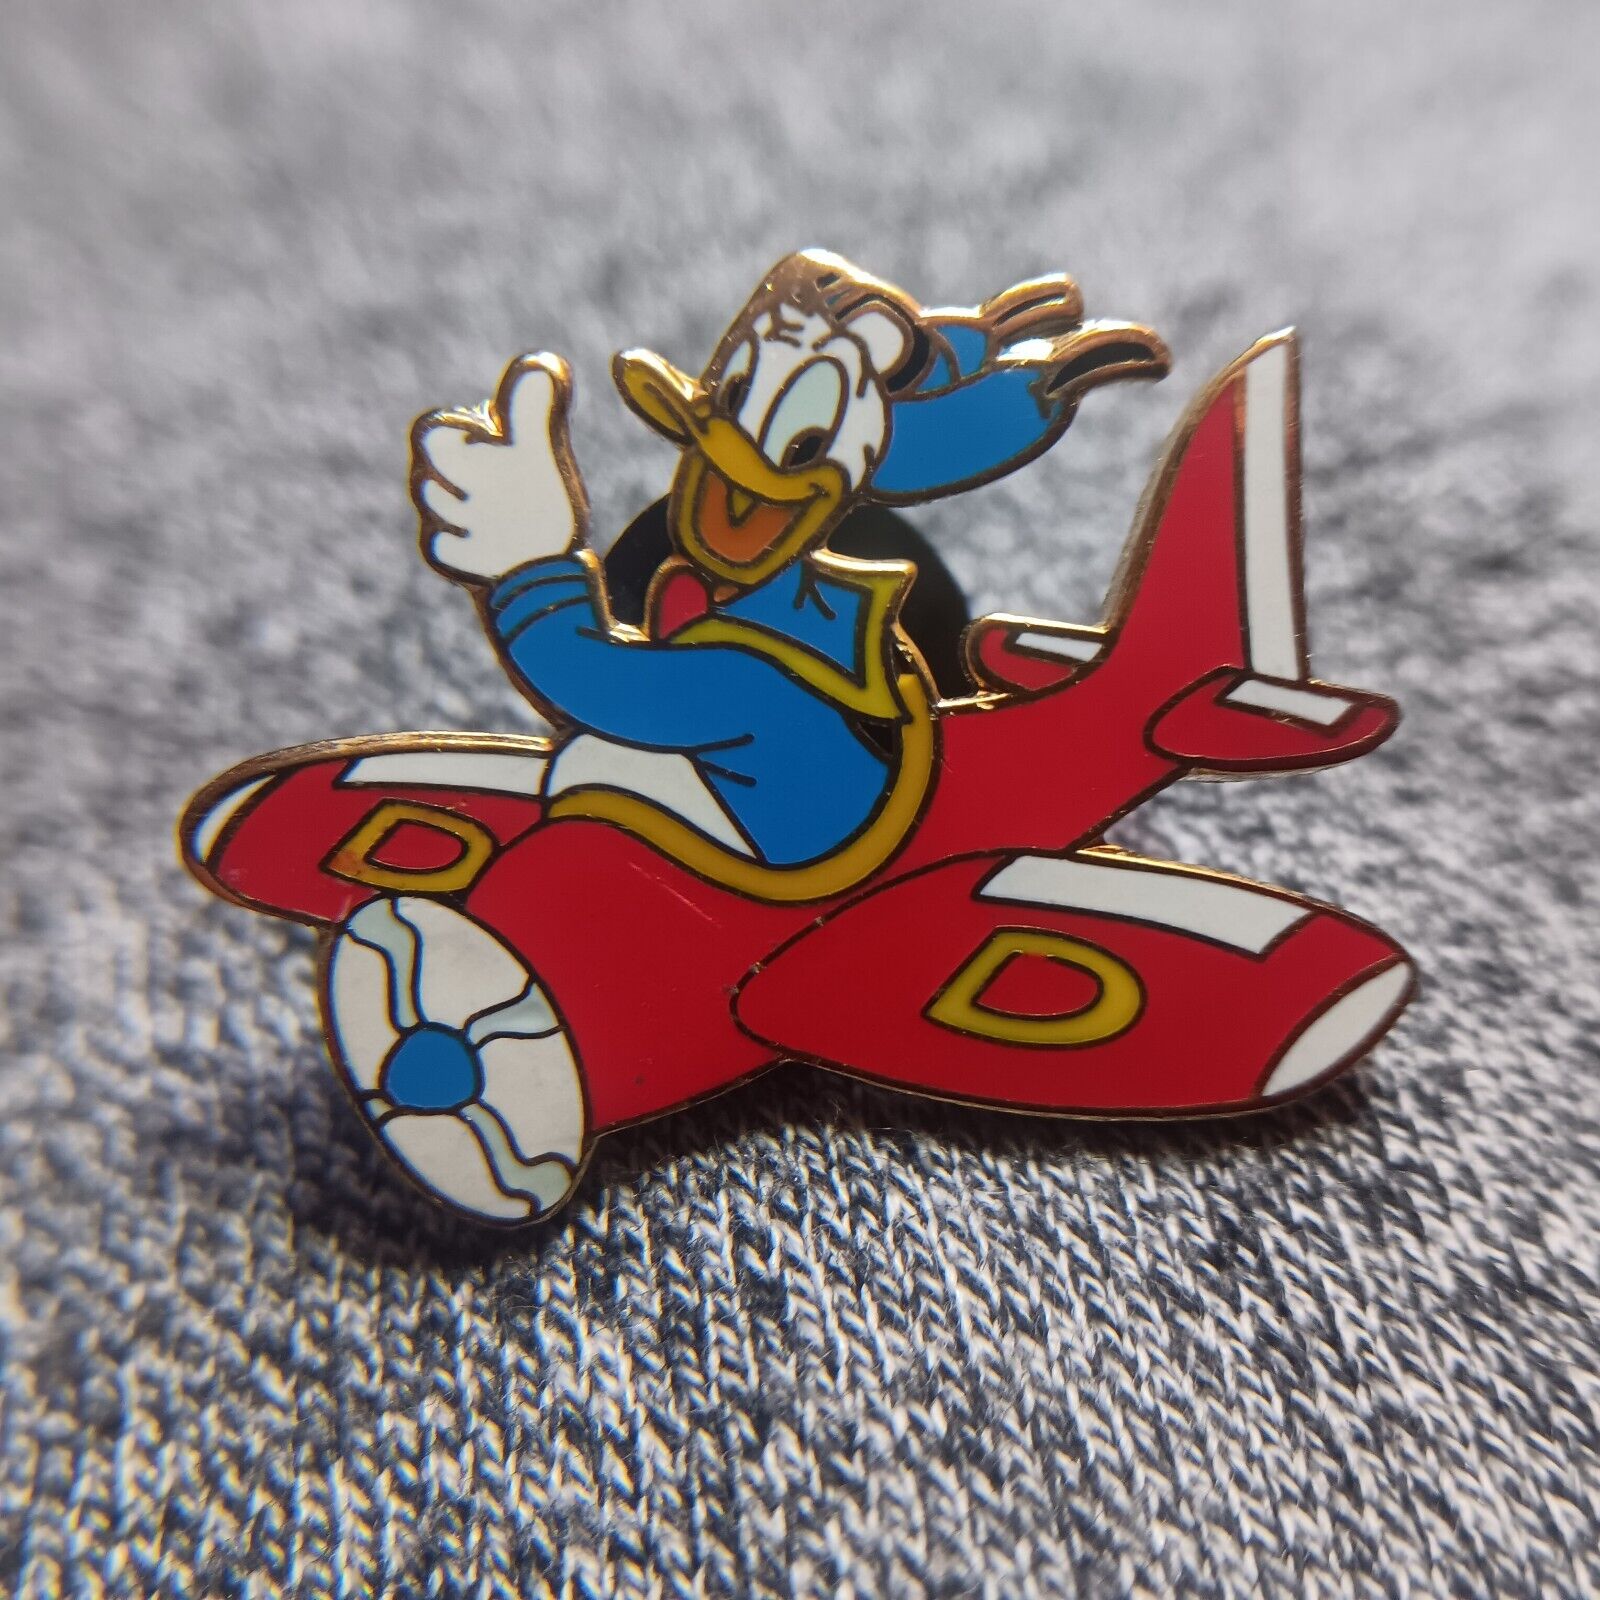 Vtg Disney Pin Donald Duck Flying plane airplane pilot propeller ace flyer trip